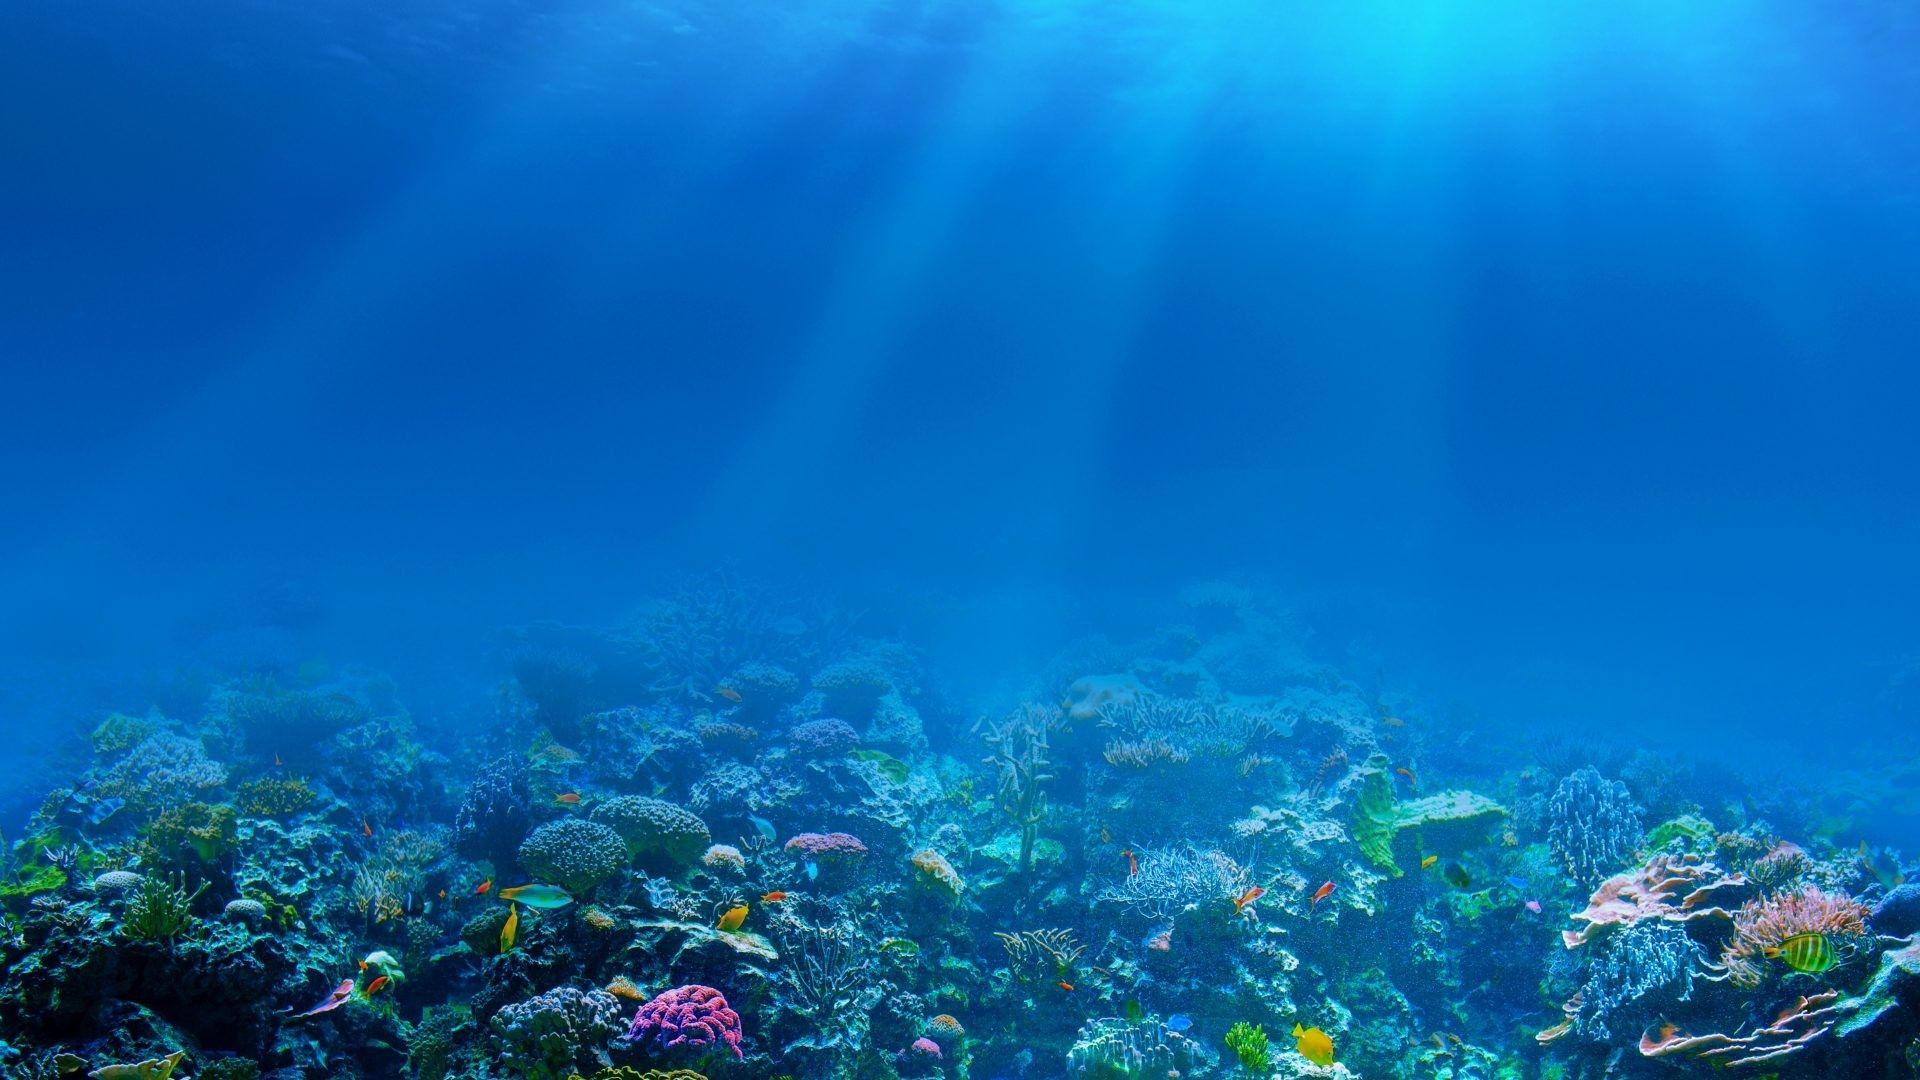 Download Under the Sea Desktop Wallpapers - Top Free Under the Sea ...